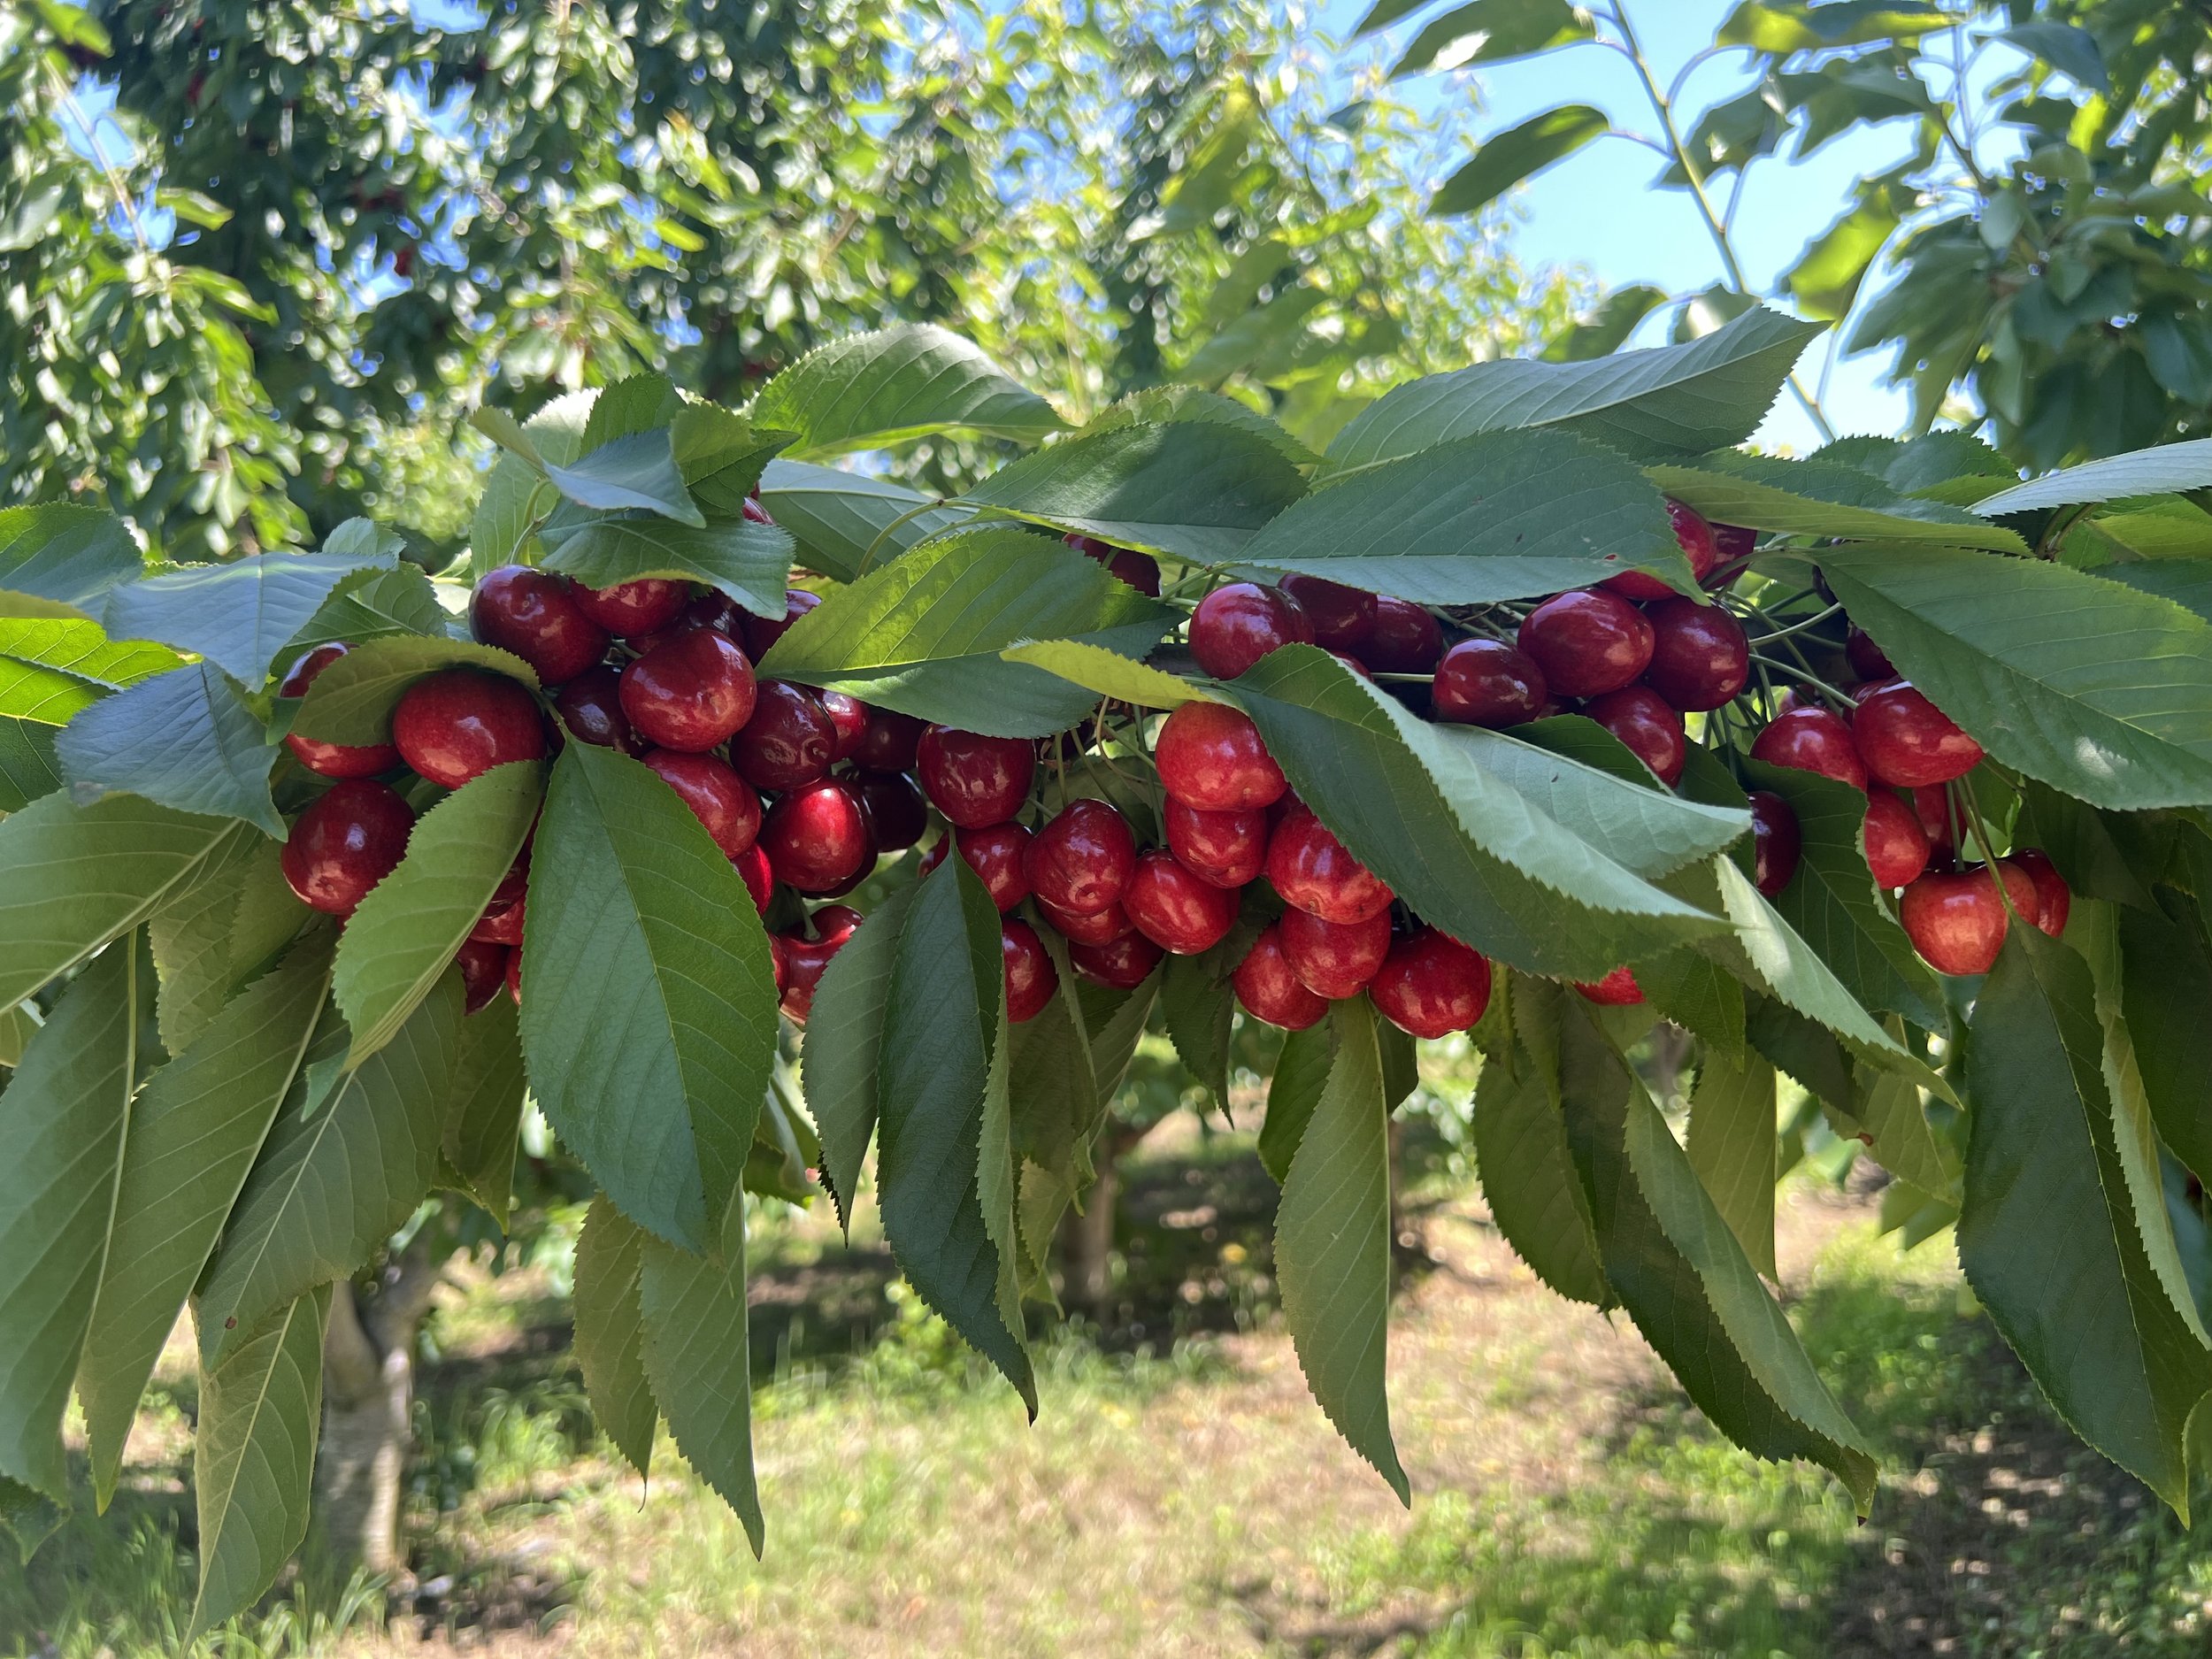 Dwelley cherries on branch (4).jpg